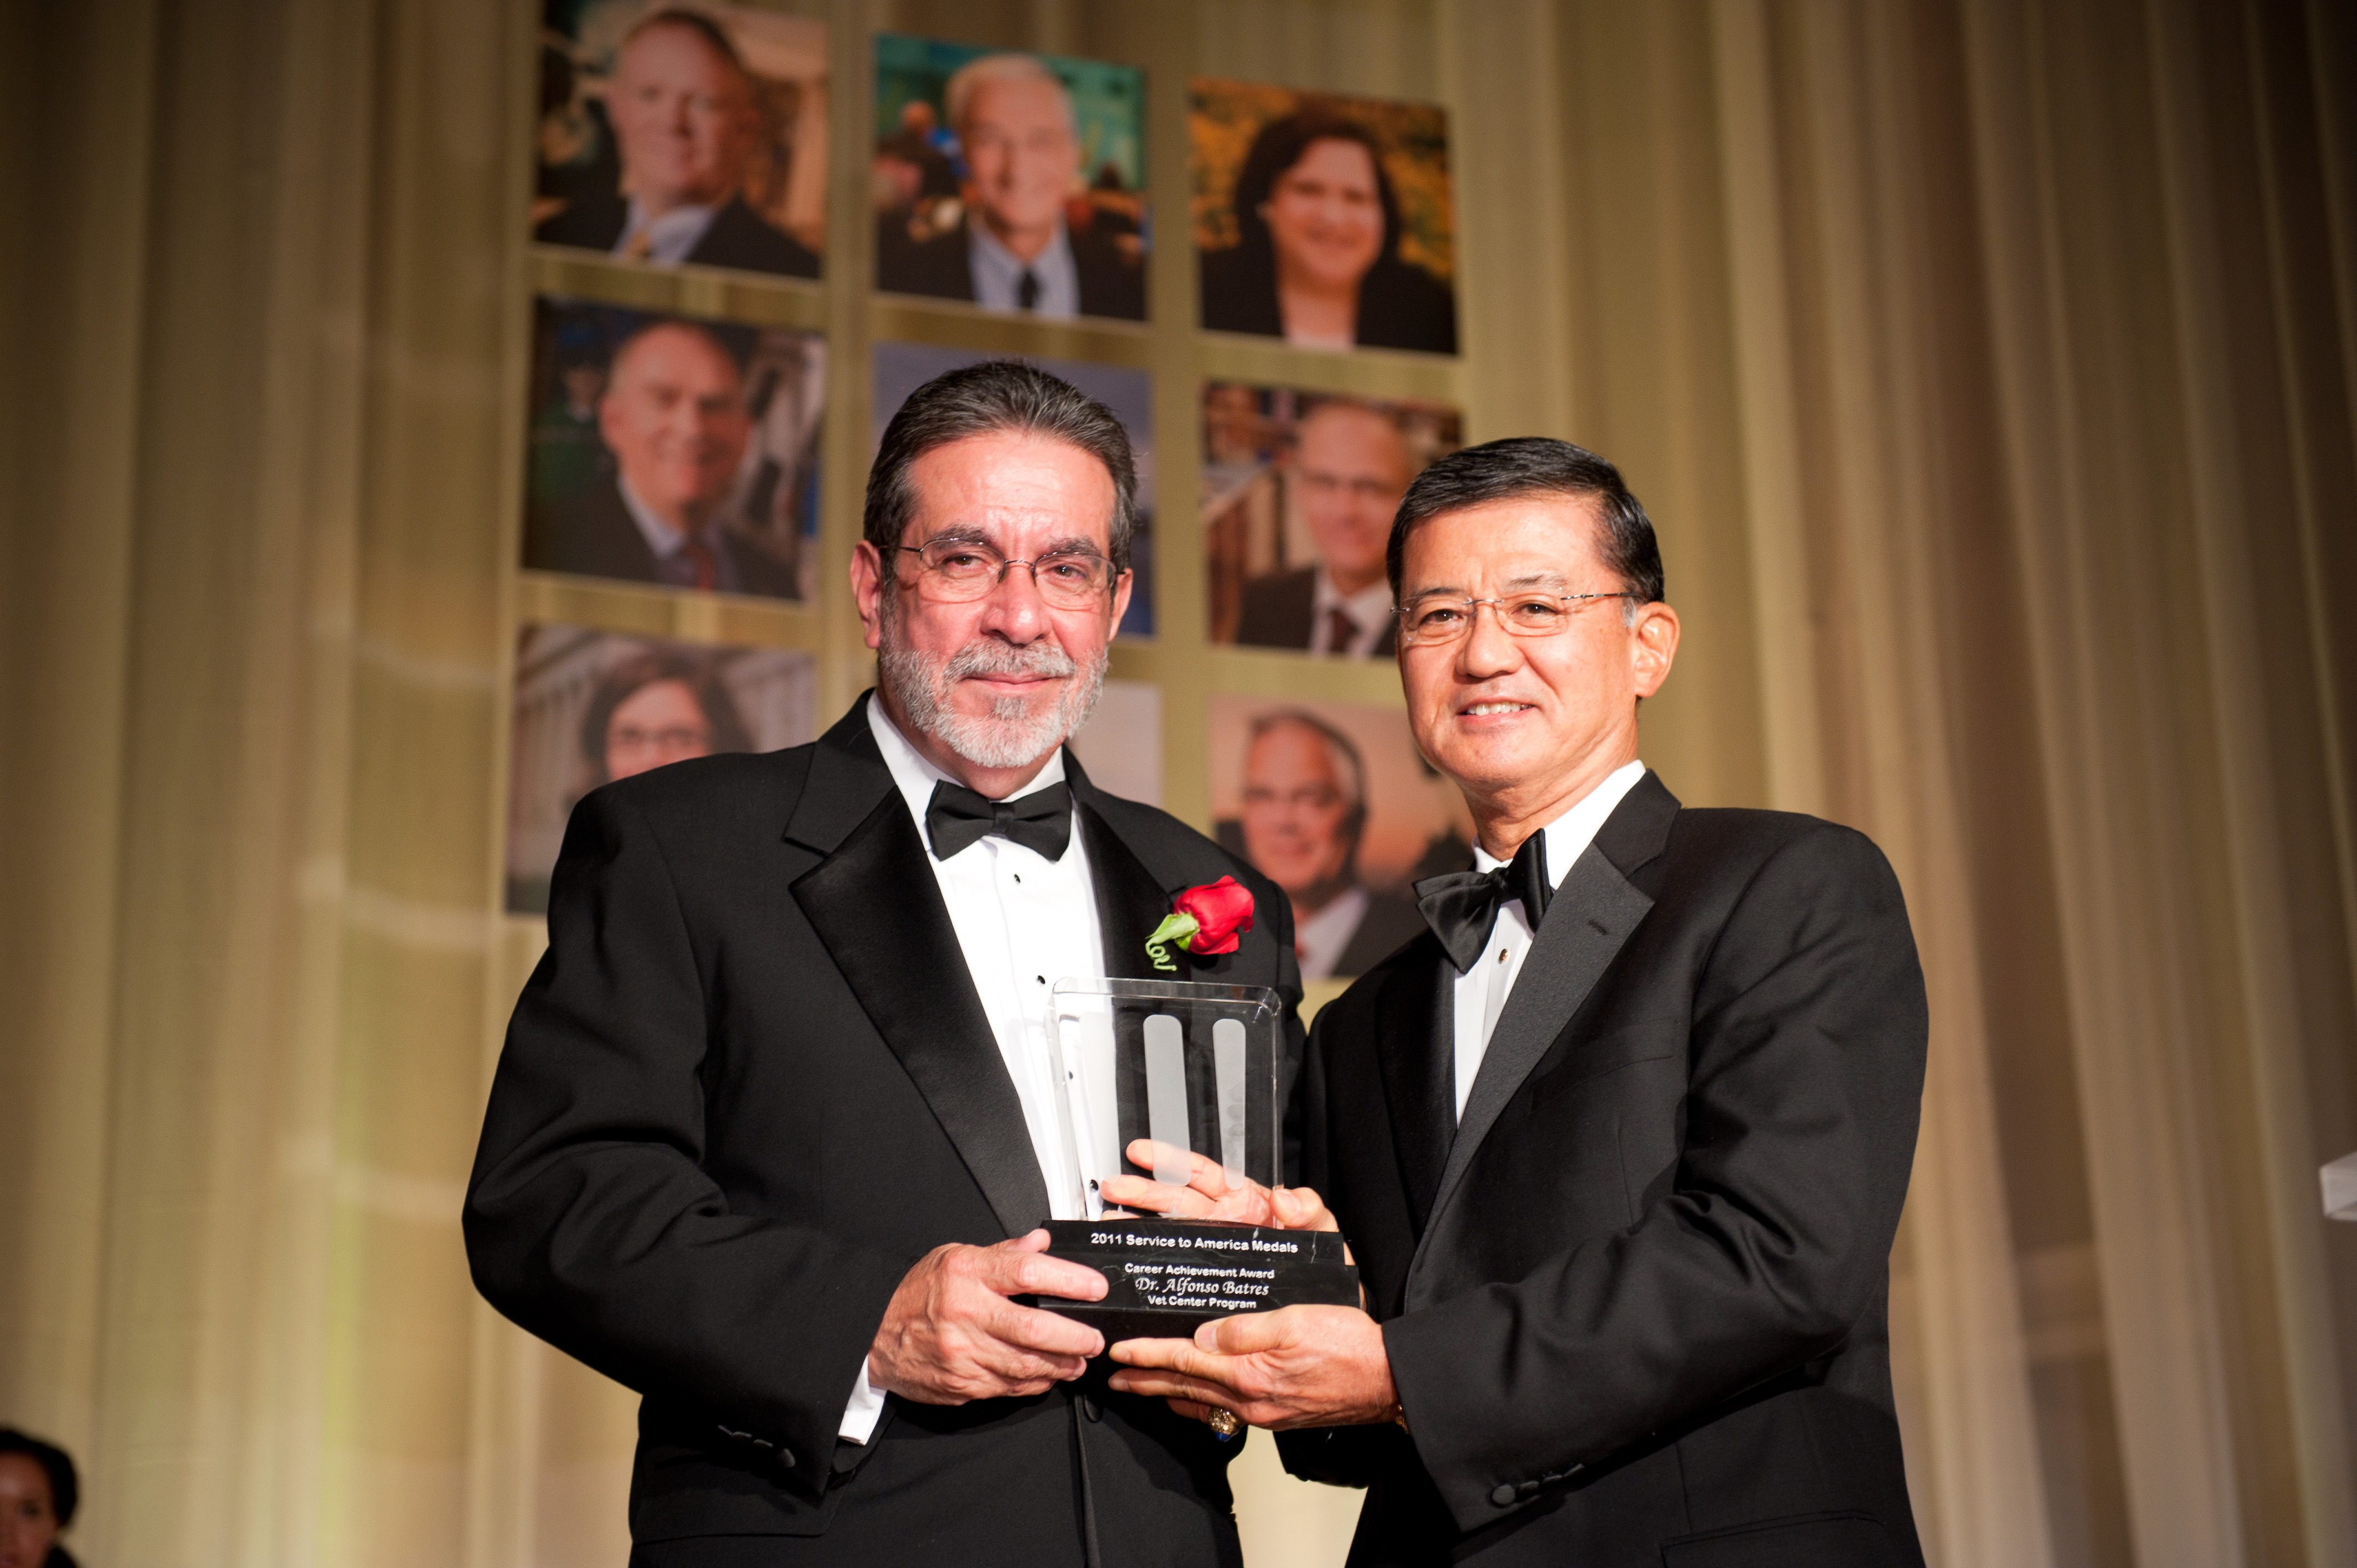 Dr. Batres receiving "Sammies" award from Secretary Shinseki 